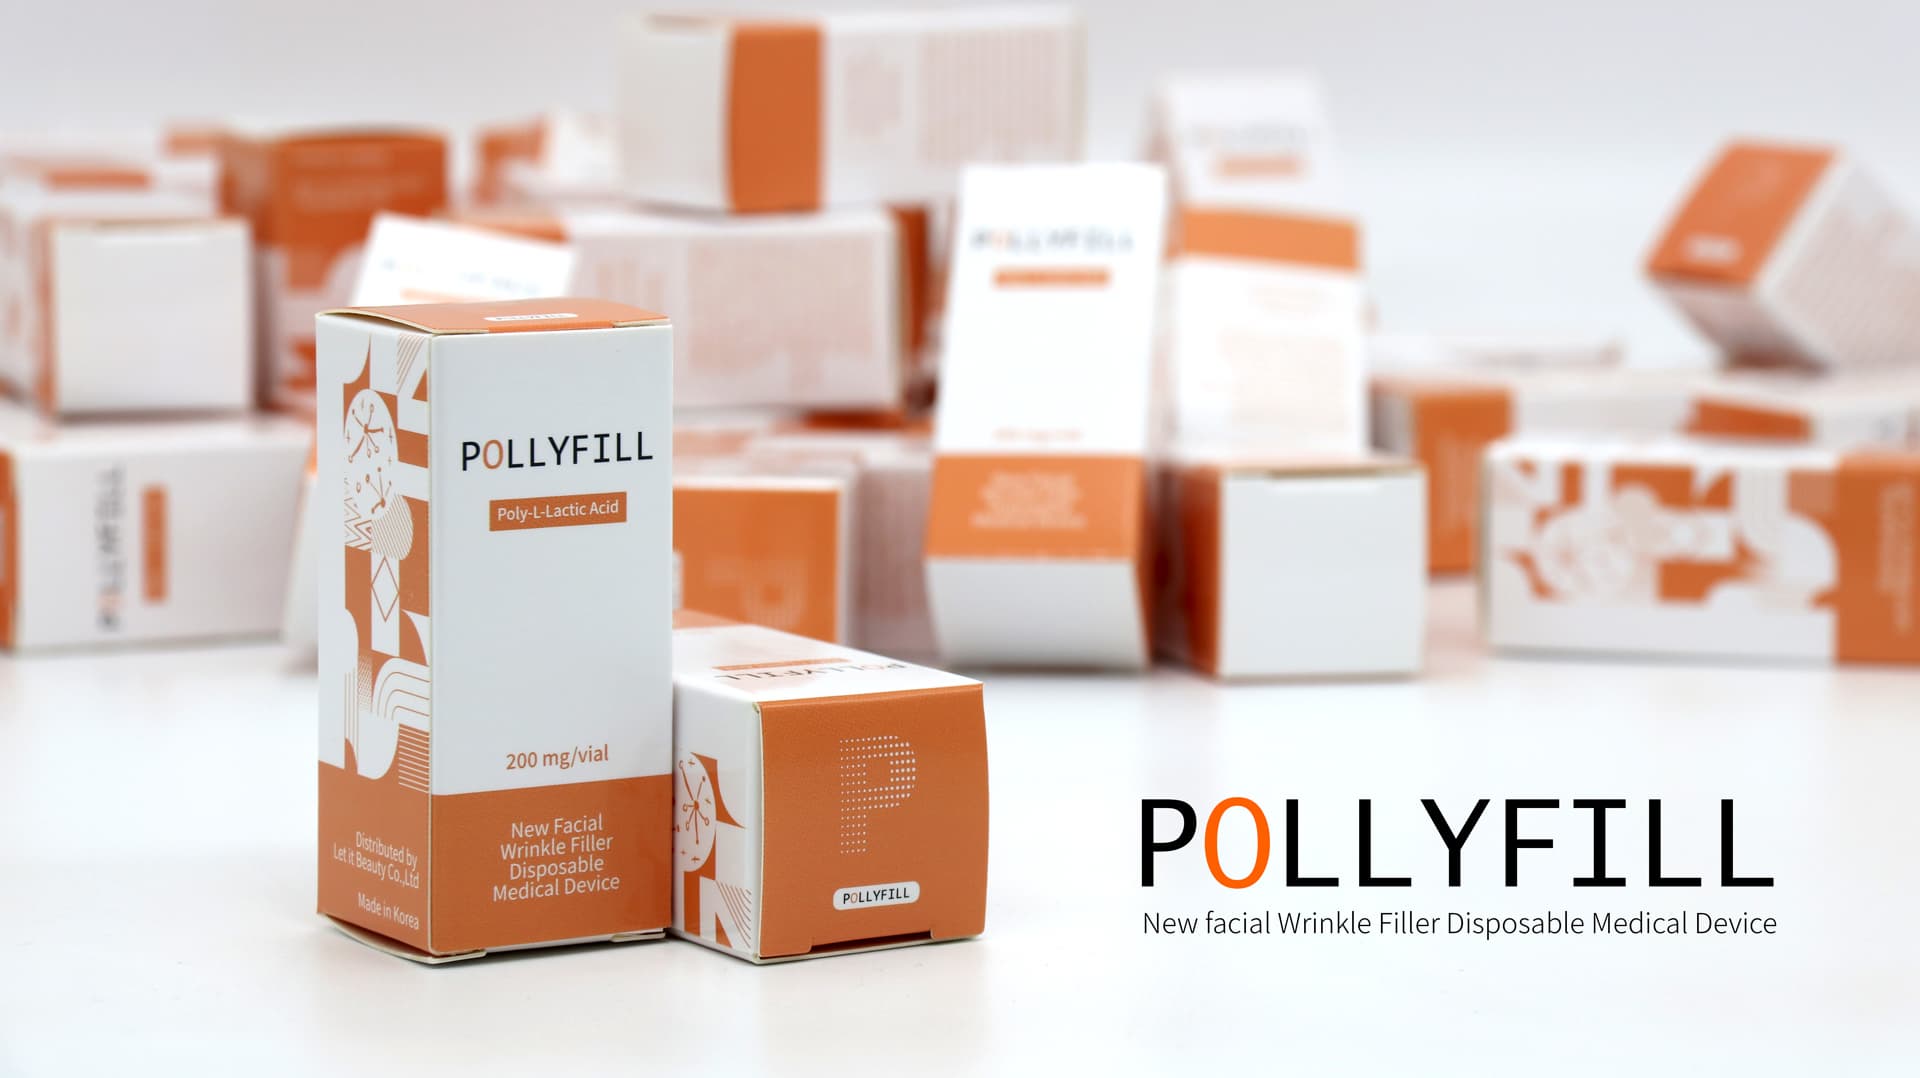 Pollyfill